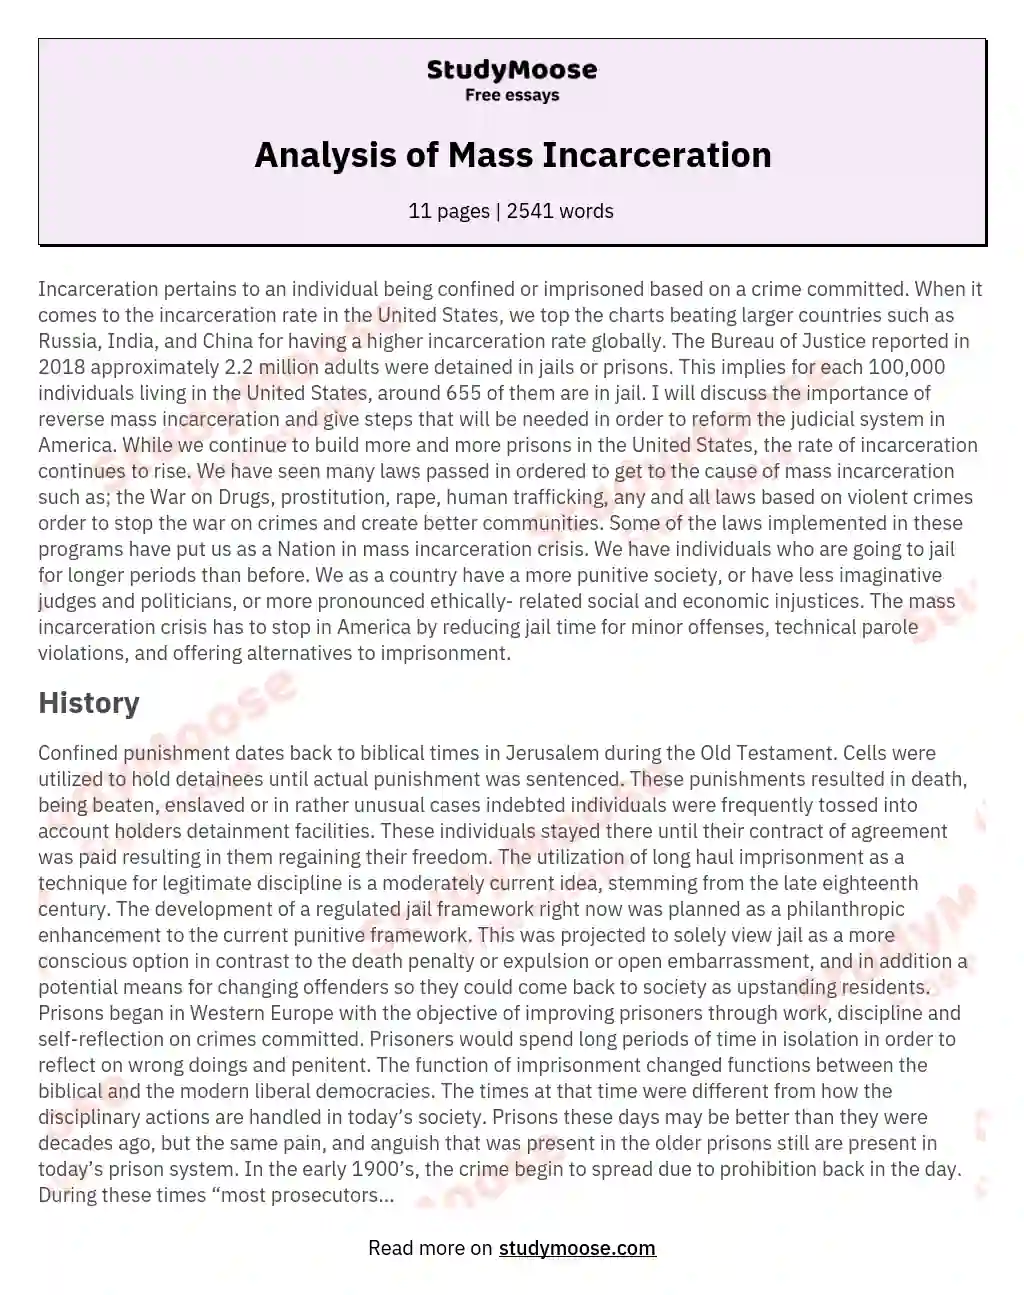 Analysis of Mass Incarceration essay